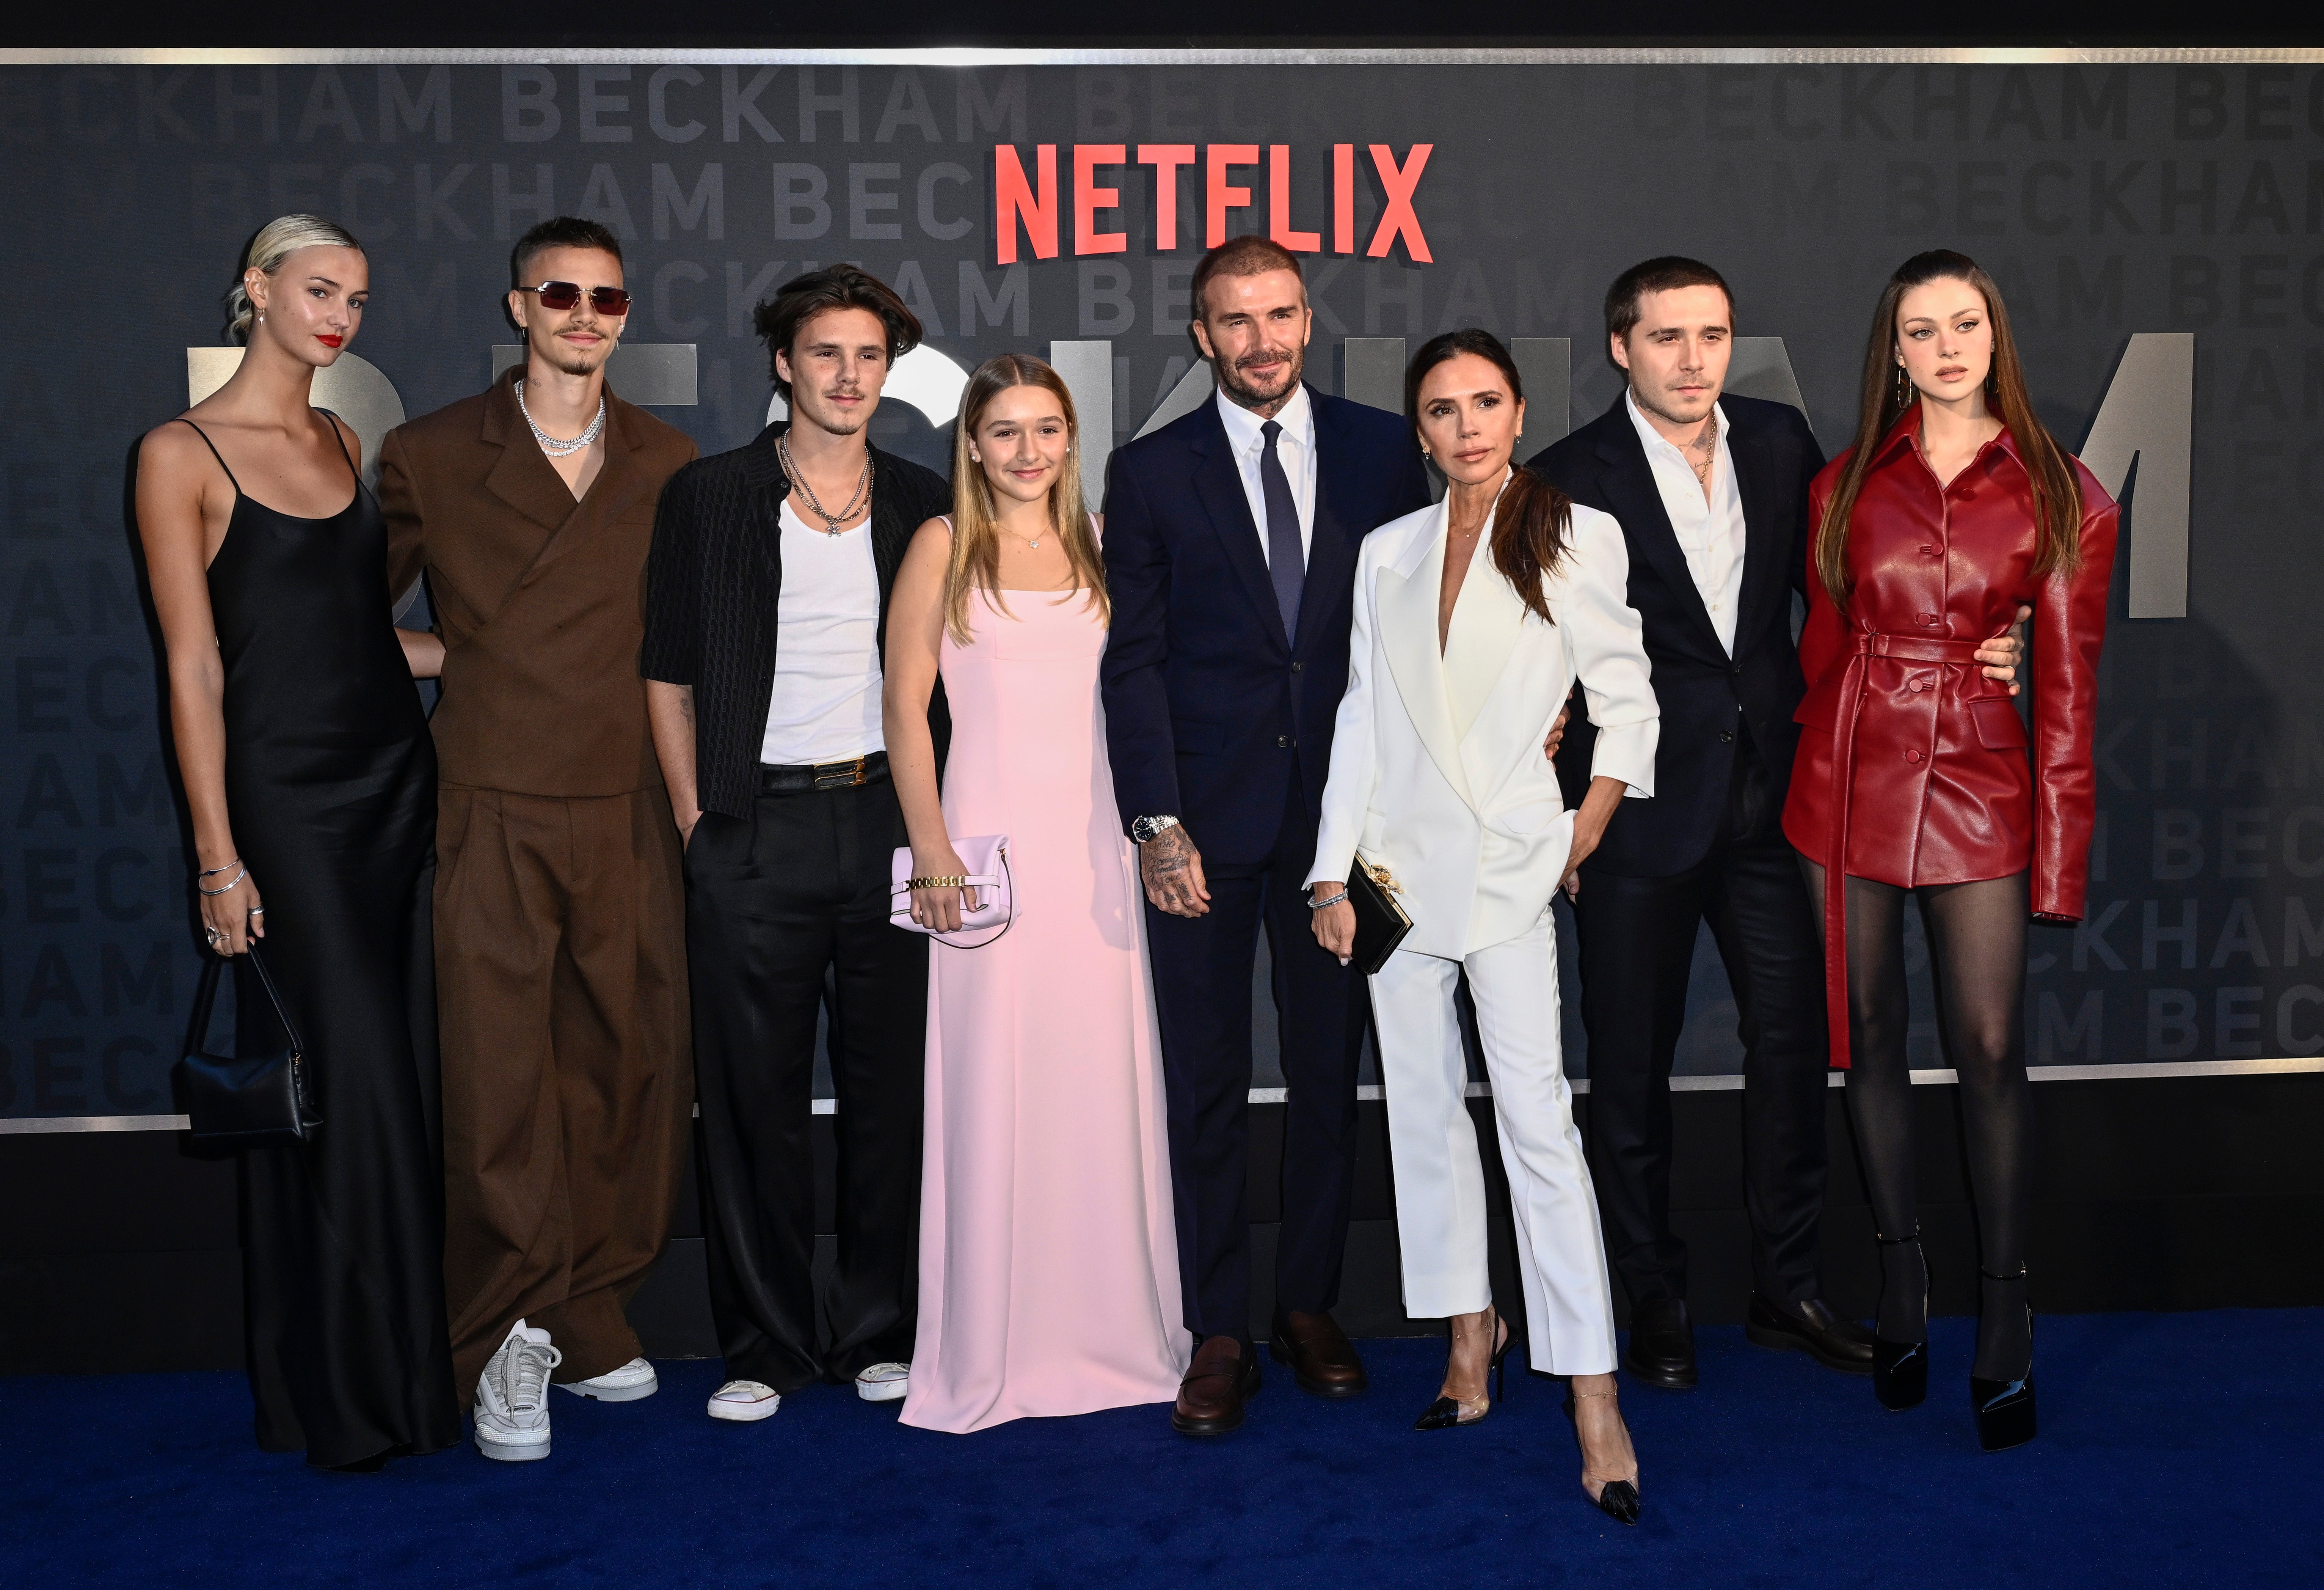 (From left) Mia Regan, Romeo Beckham, Cruz Beckham, Harper Beckham, David Beckham, Victoria Beckham, Brooklyn Peltz Beckham and Nicola Peltz Beckham